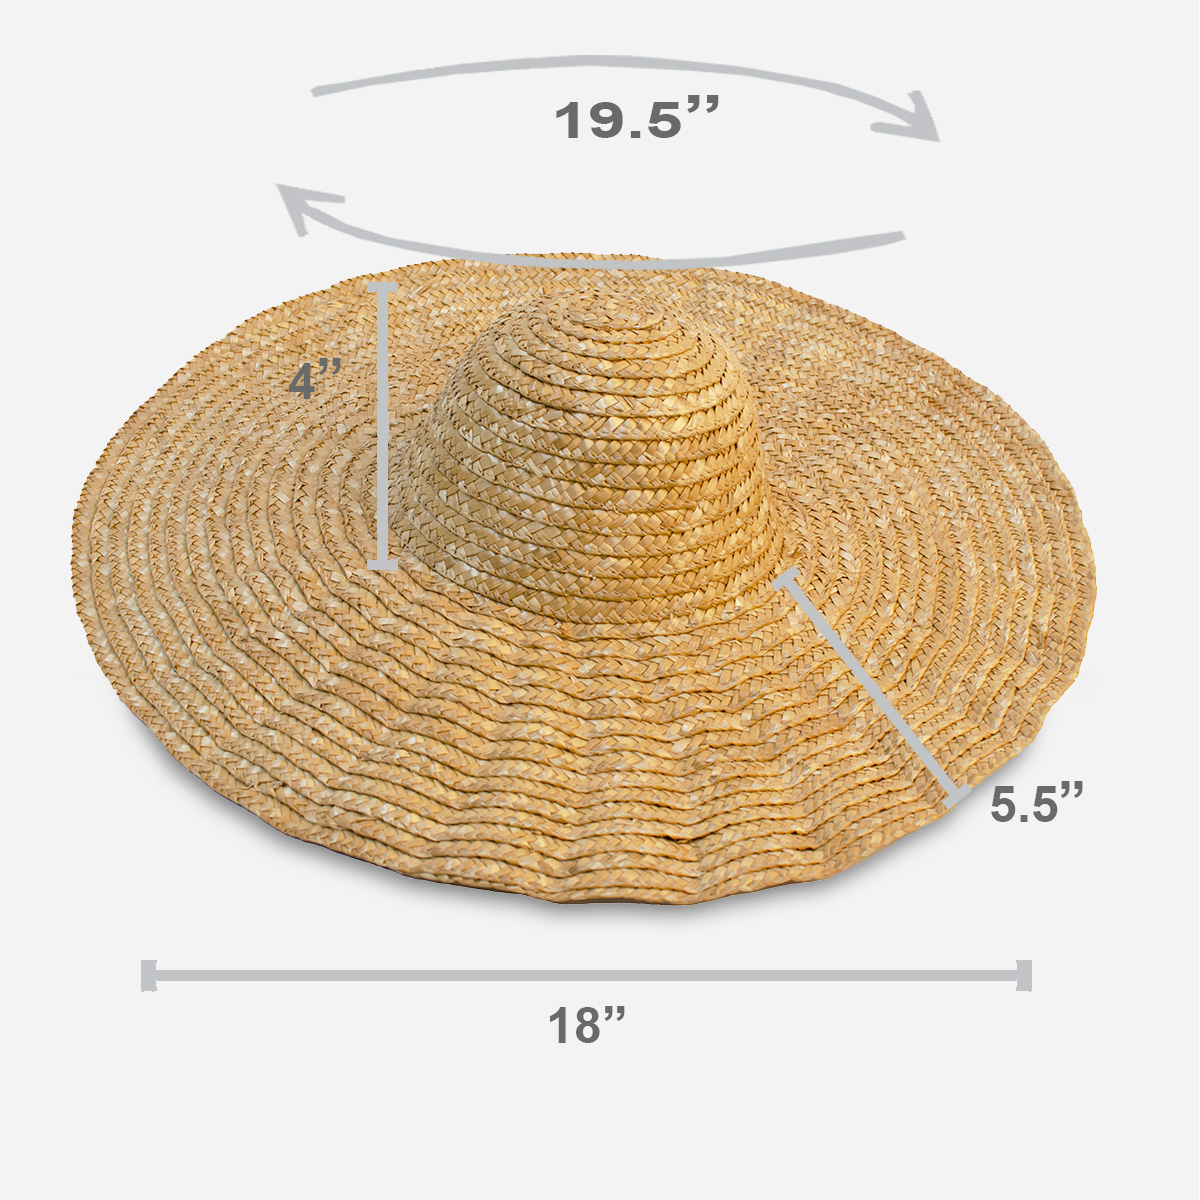 Straw sun hat size